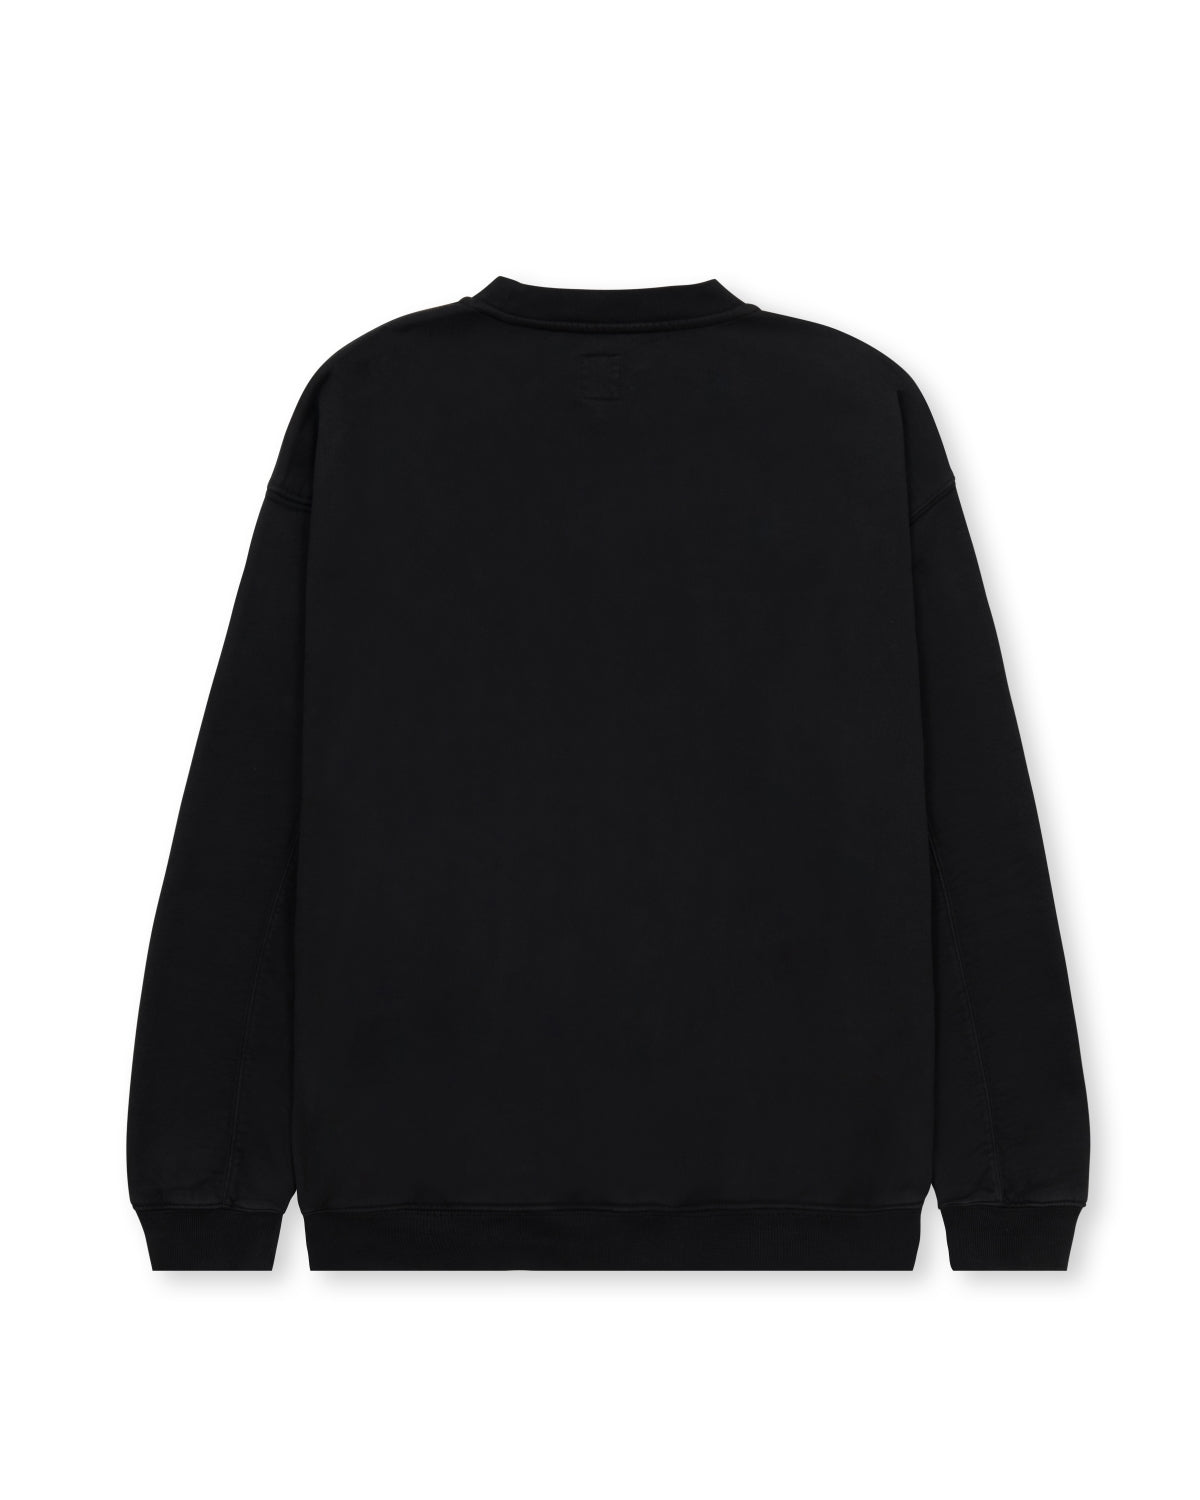 Final Stand Crewneck Sweatshirt - Black 2